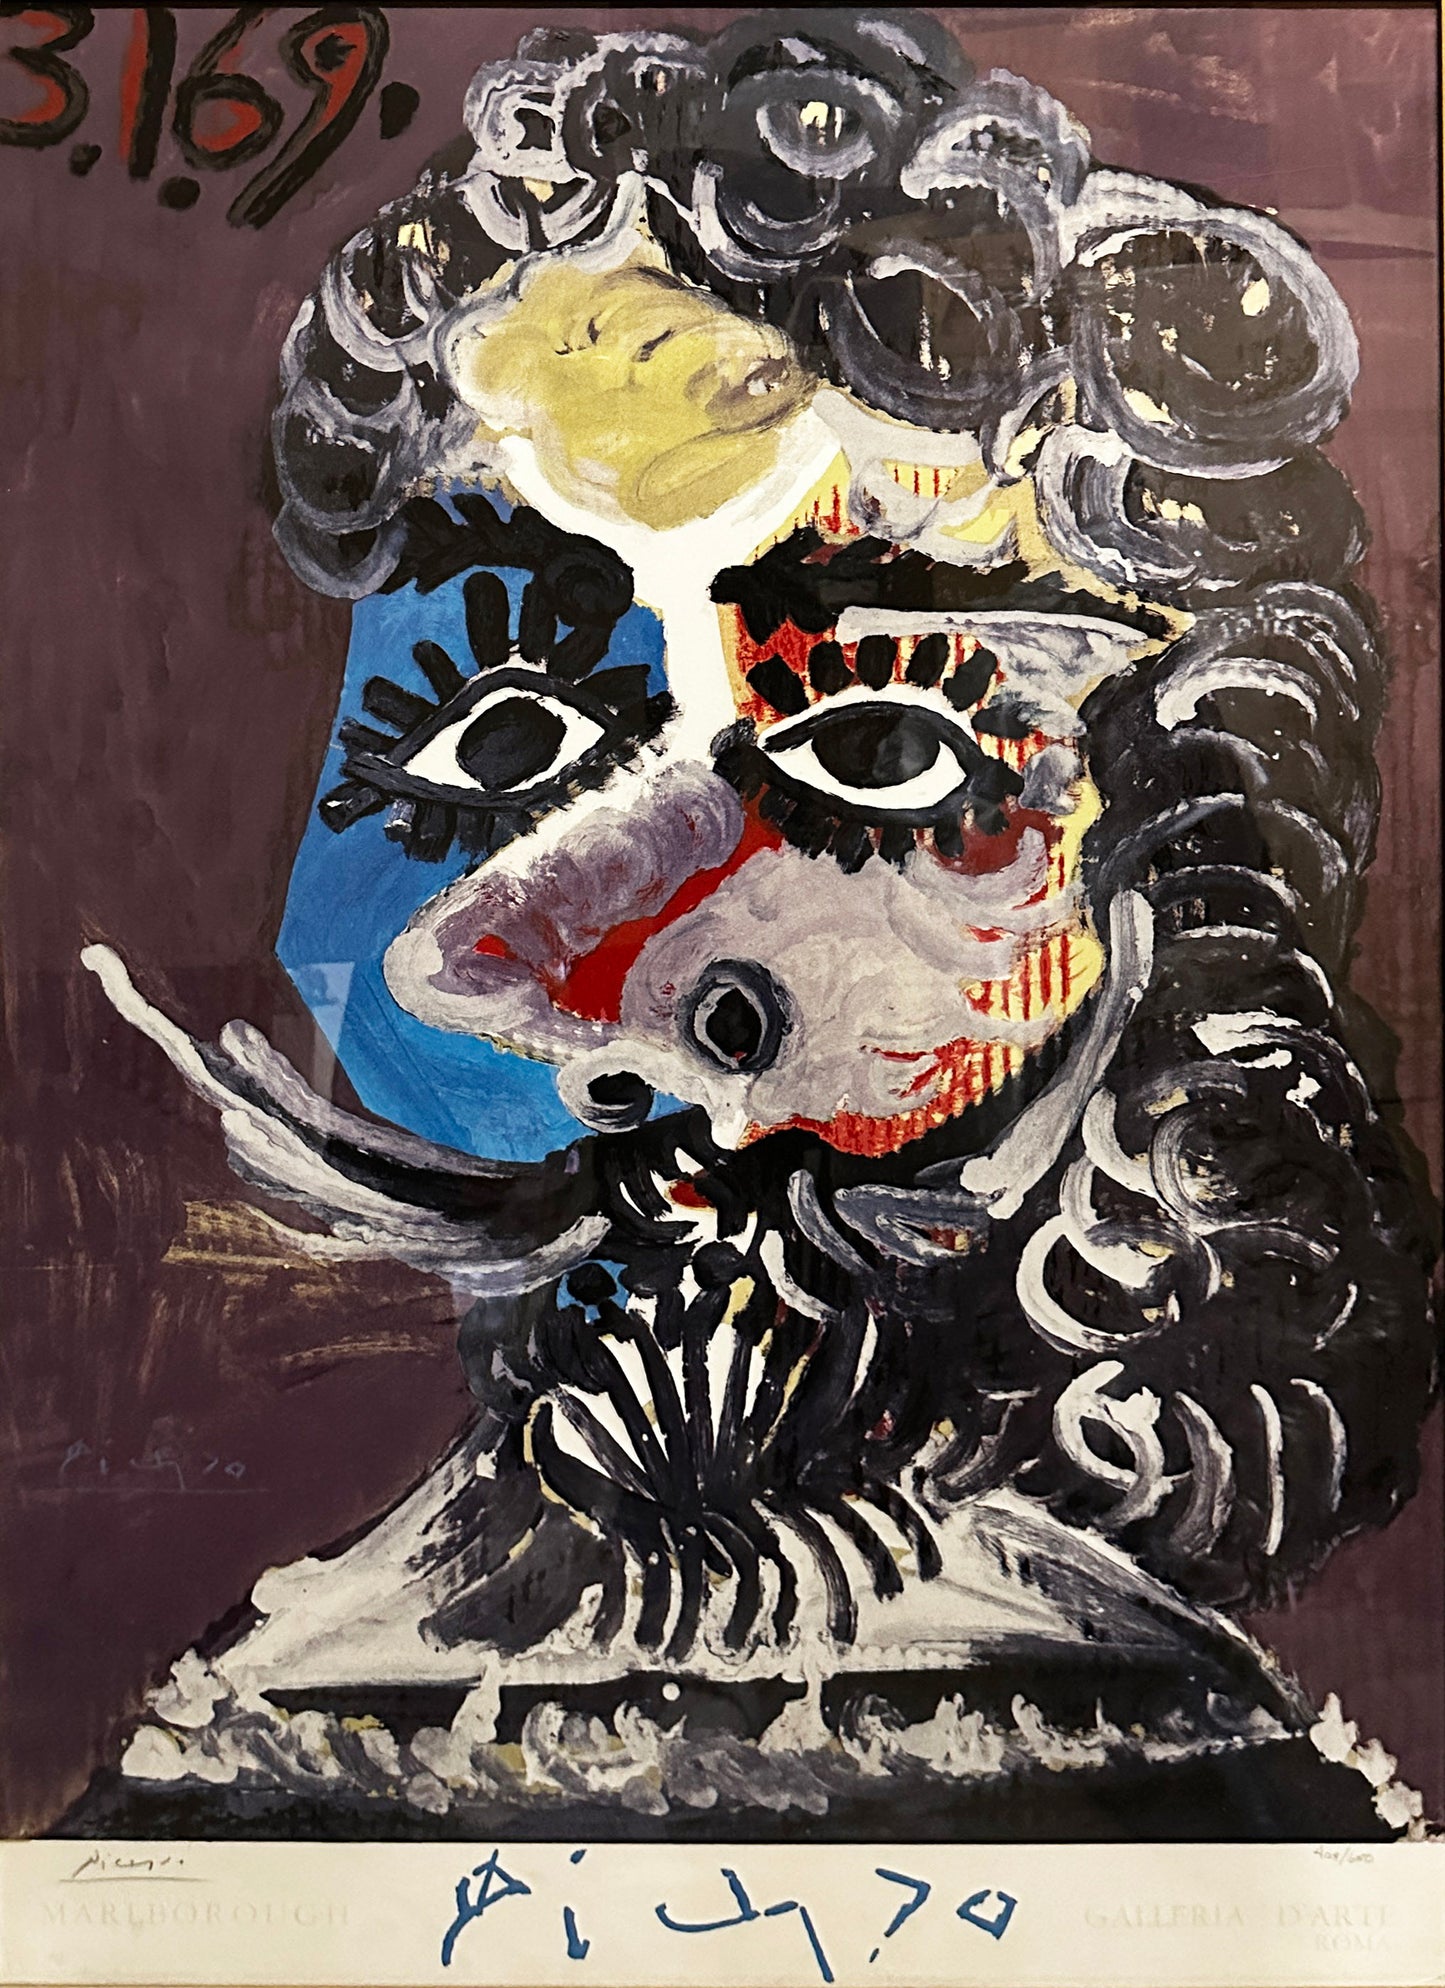 Pablo Picasso Lithograph: "Earl of Marlborough" 1969